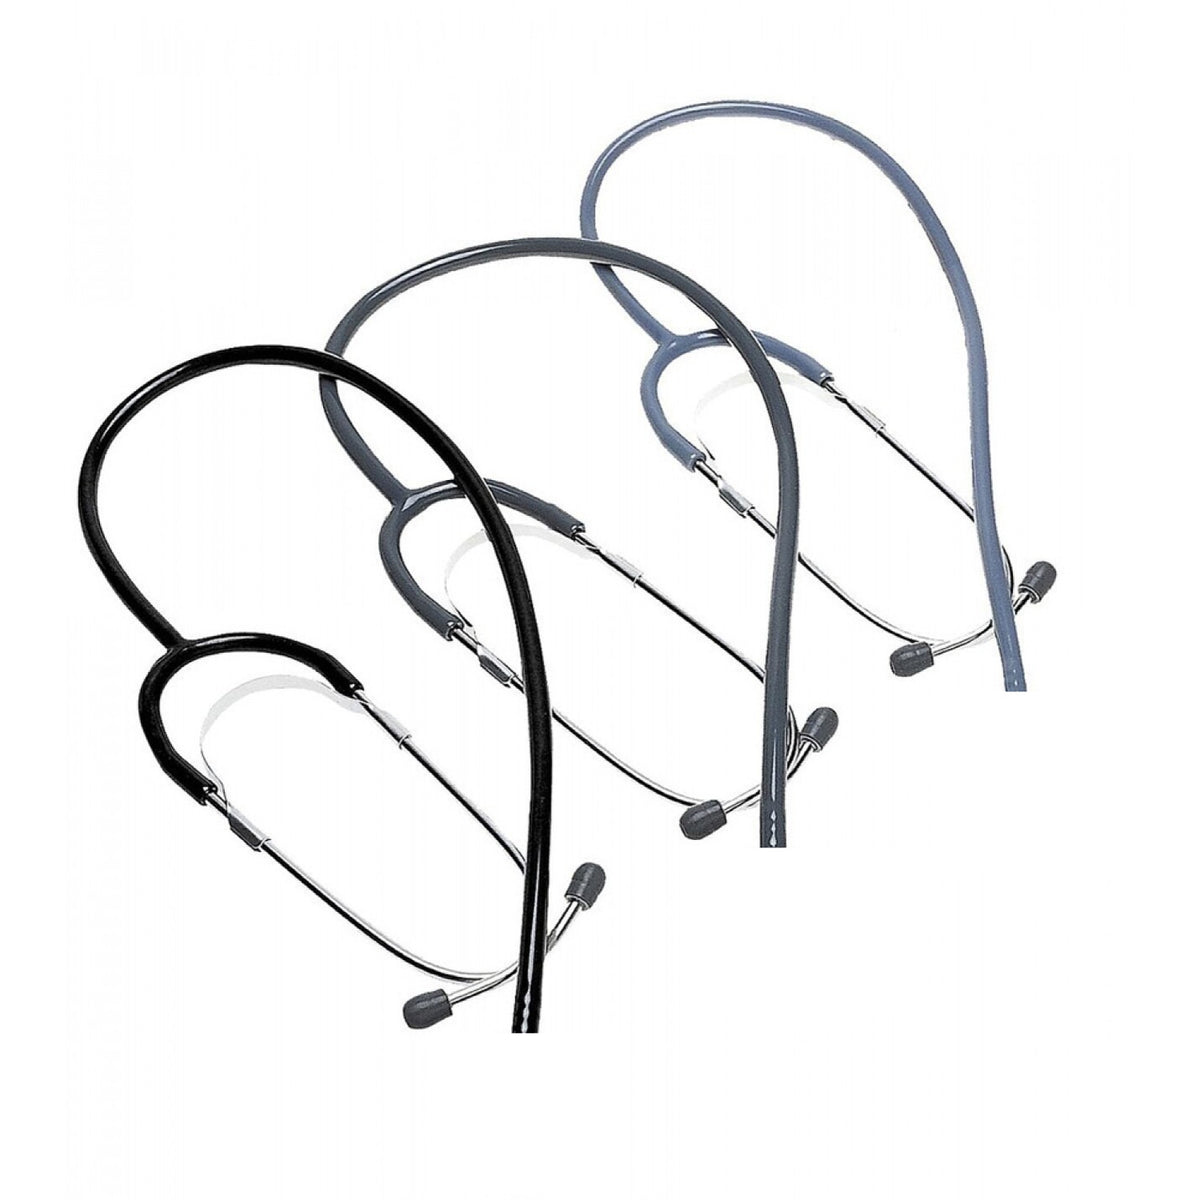 Riester Duplex De Luxe Stethoscope Binaural With Y-Tubing